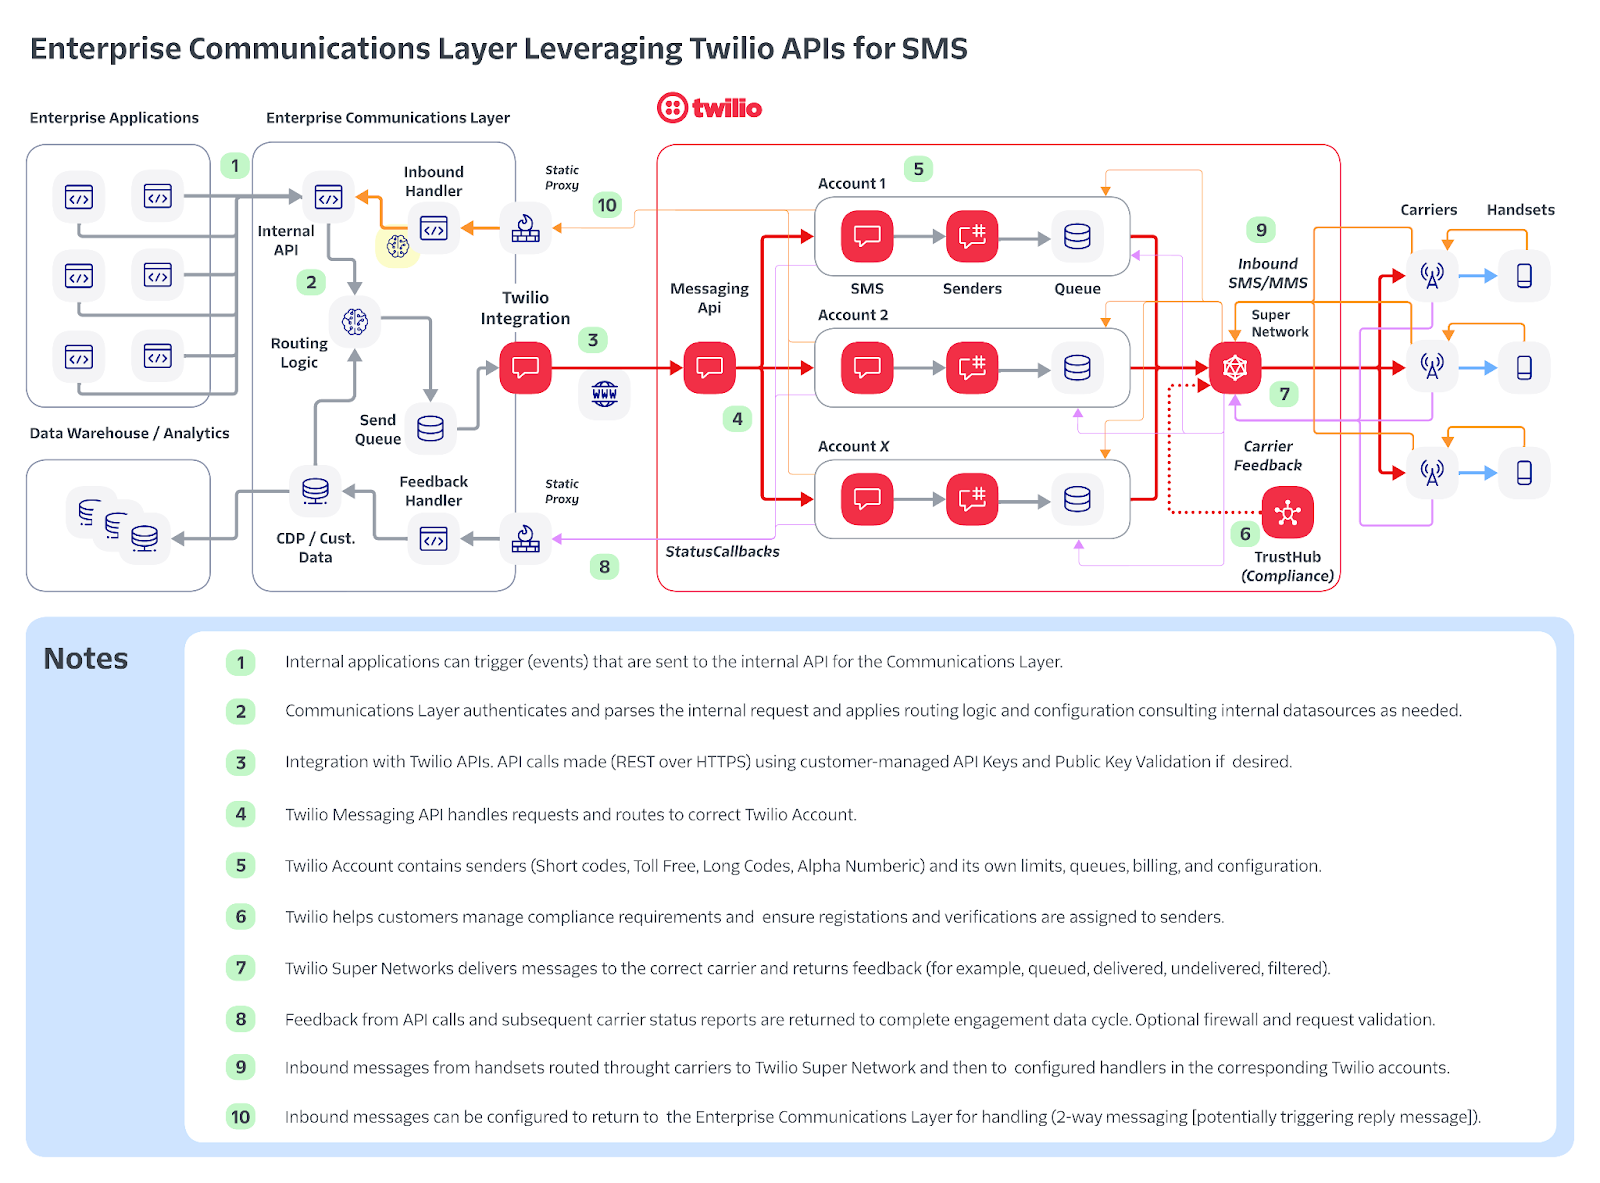 Enterprise Communications Layer architecture